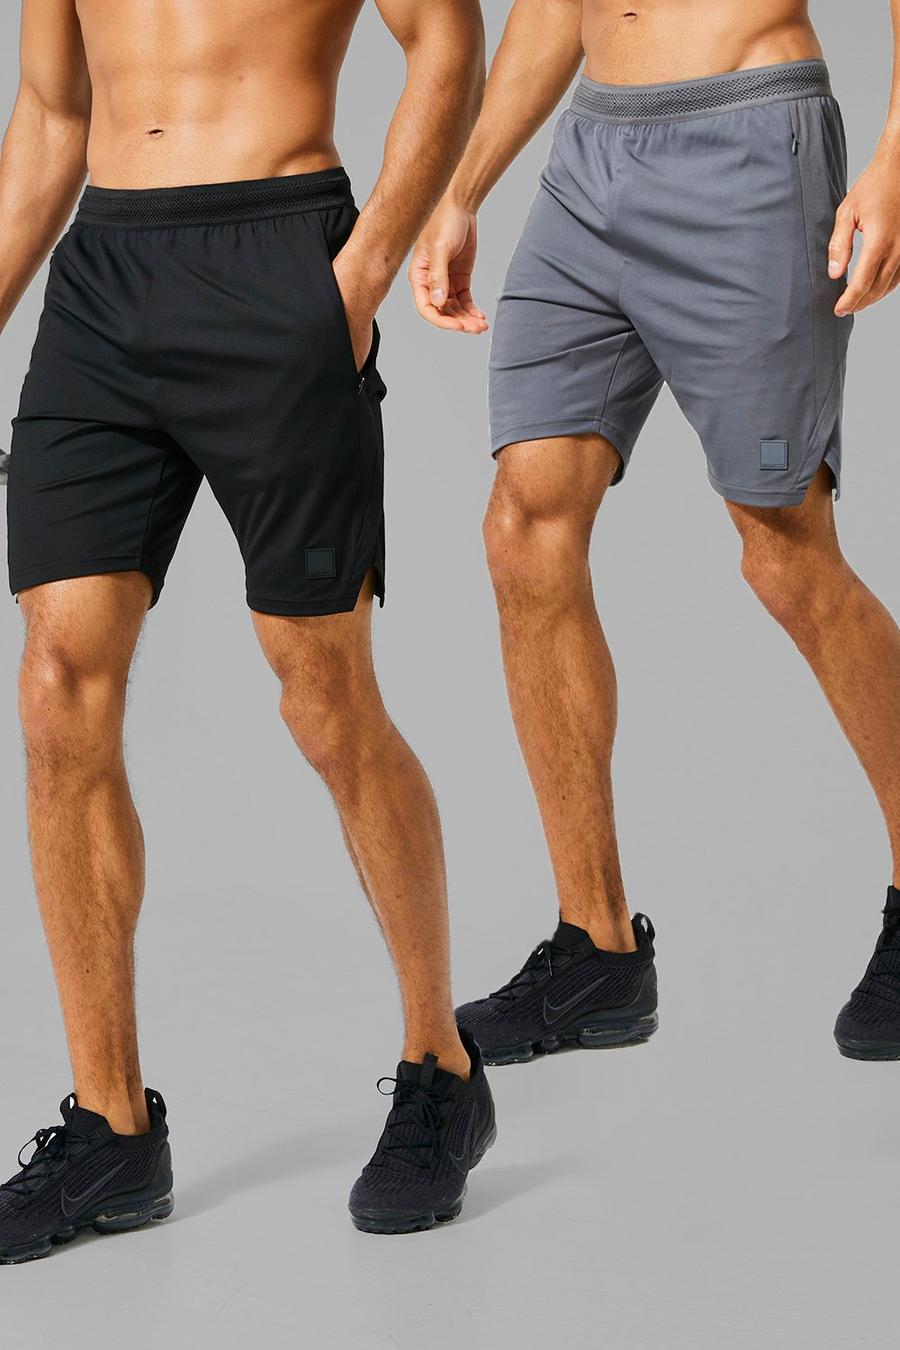 Lot de 2 shorts de sport - MAN Active, Multi